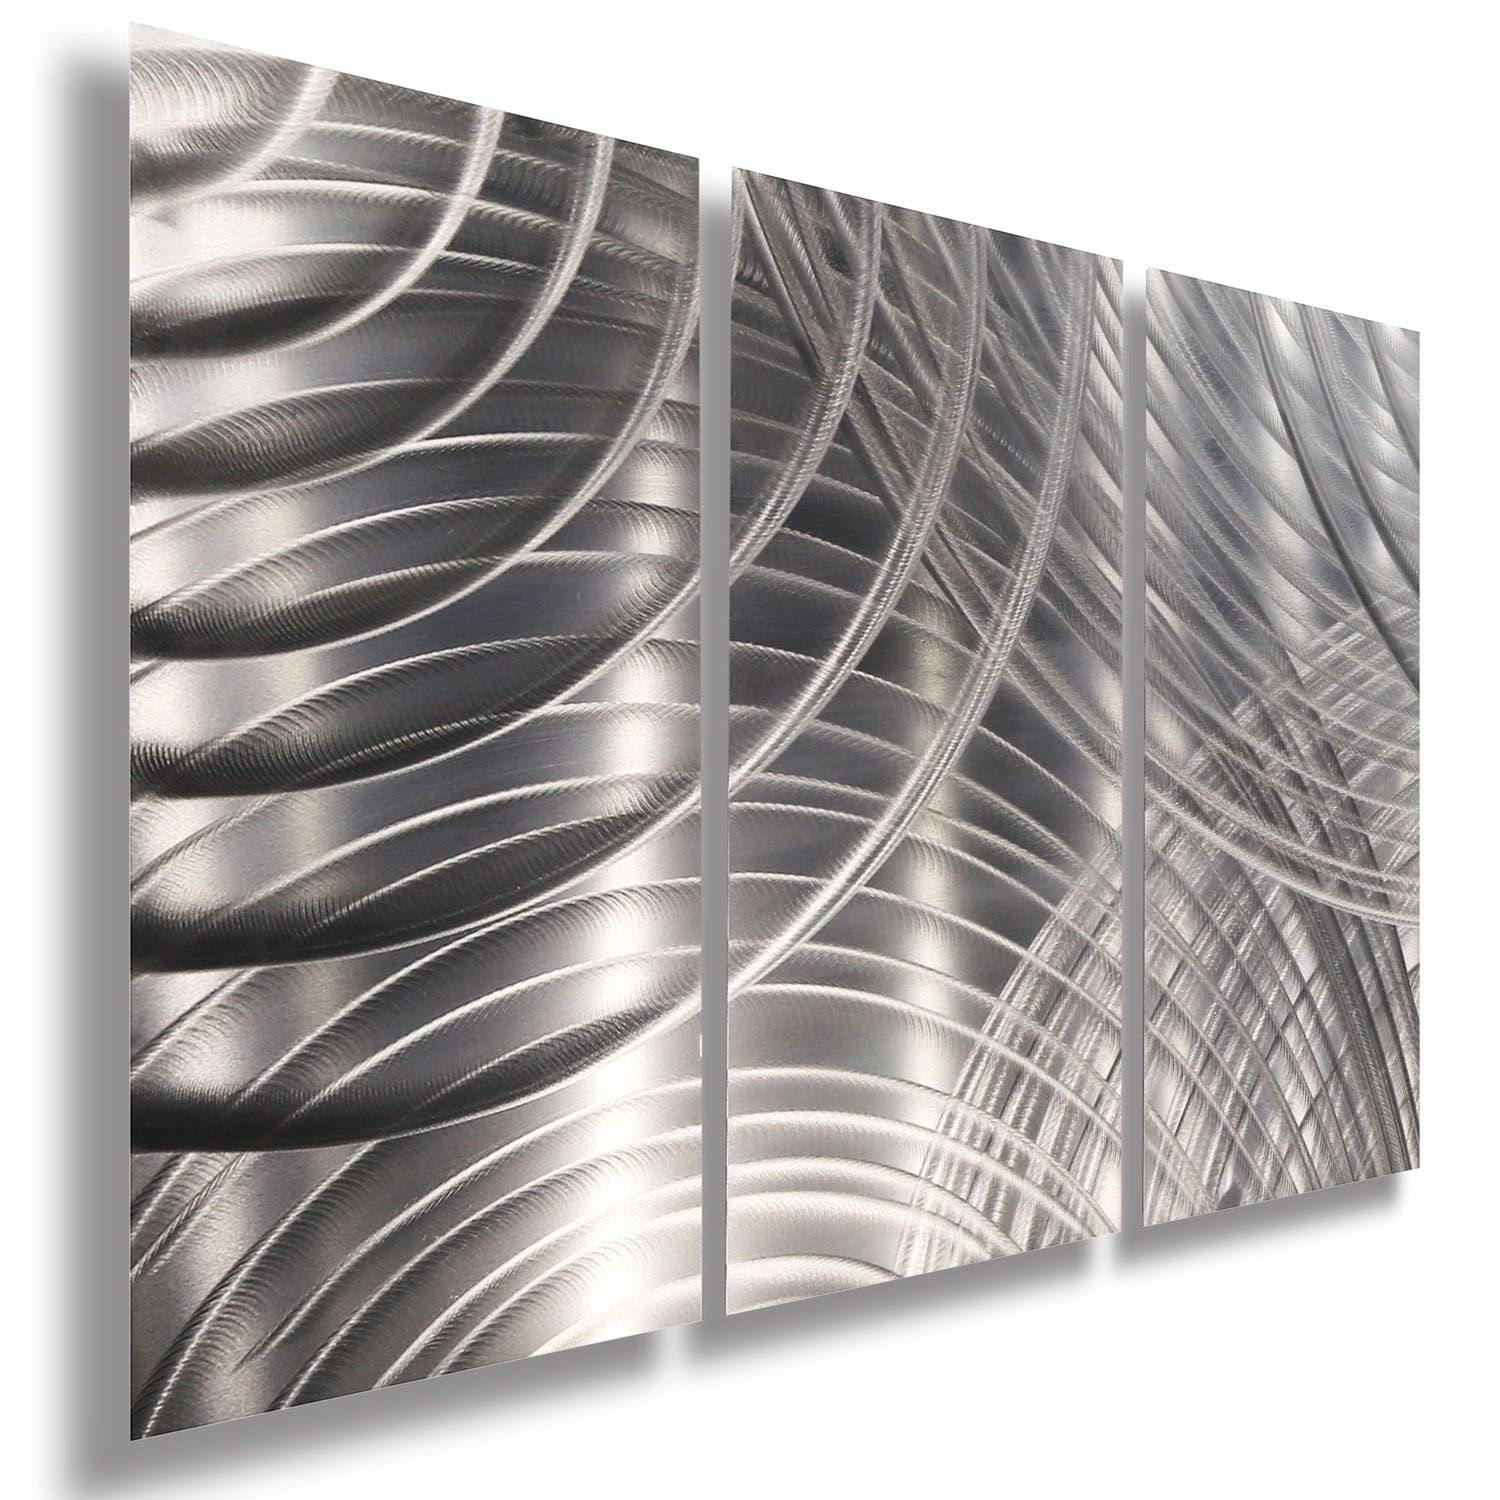 41 Silver Metal Wall Art, Wall Decor Metal Sculpture Throughout Silver Metal Wall Art (View 13 of 20)